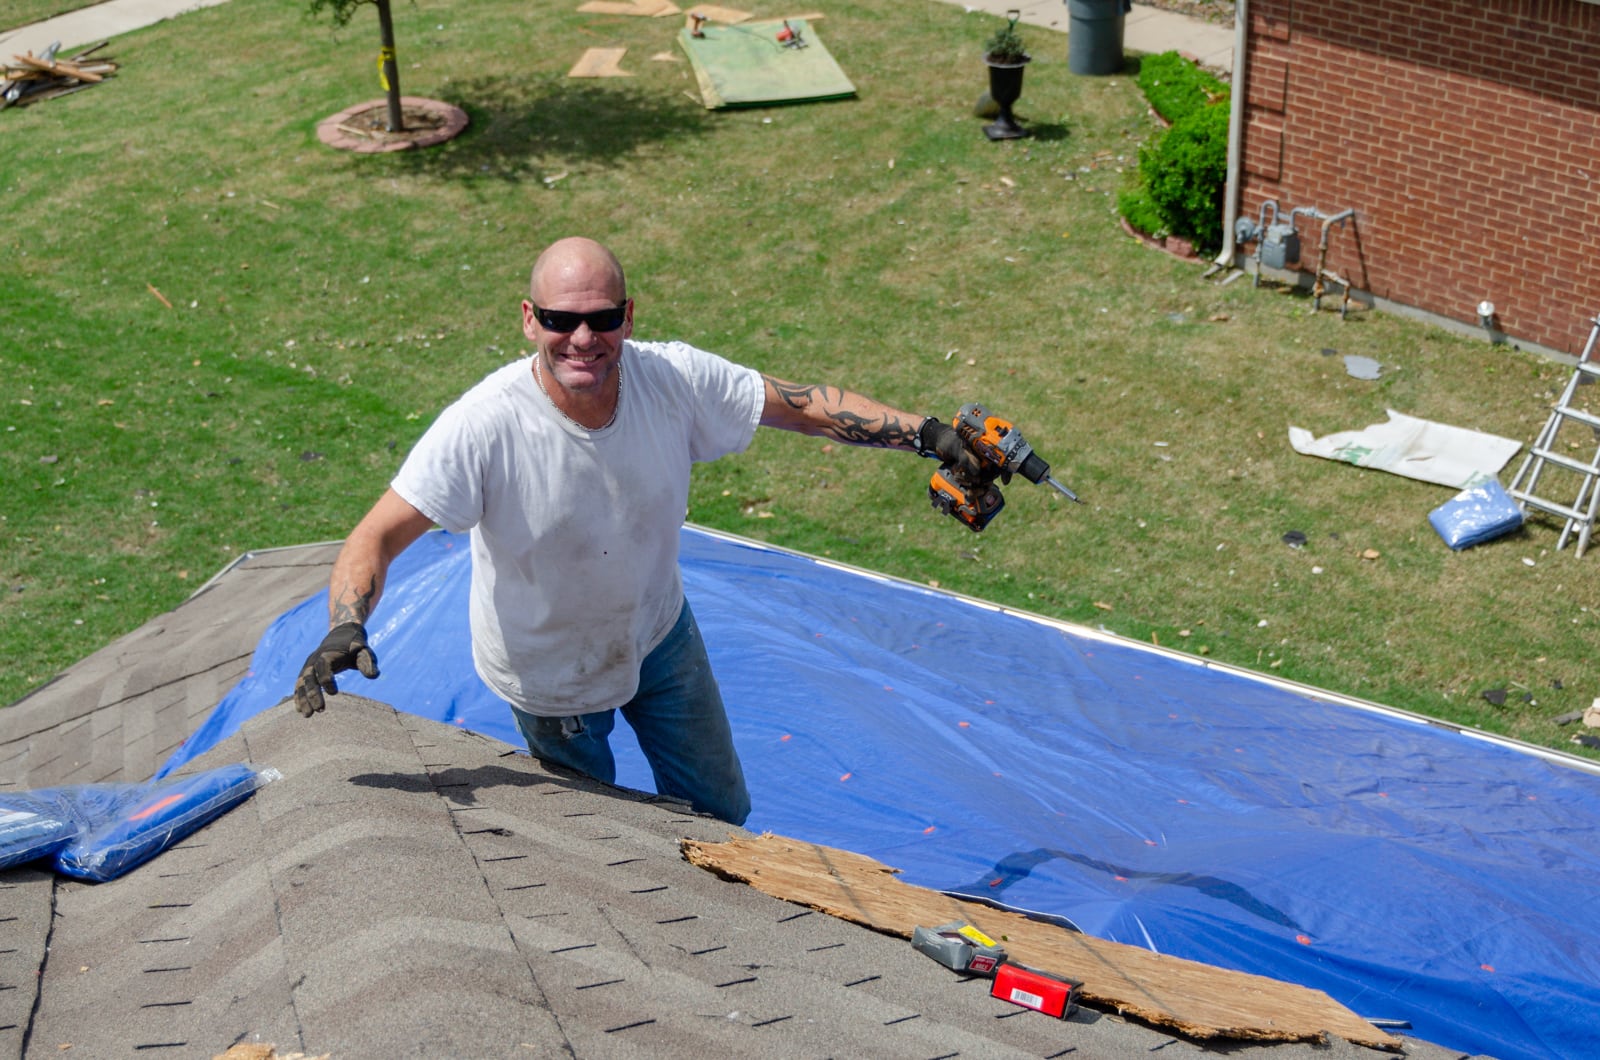 A man helping repair his friend's roof